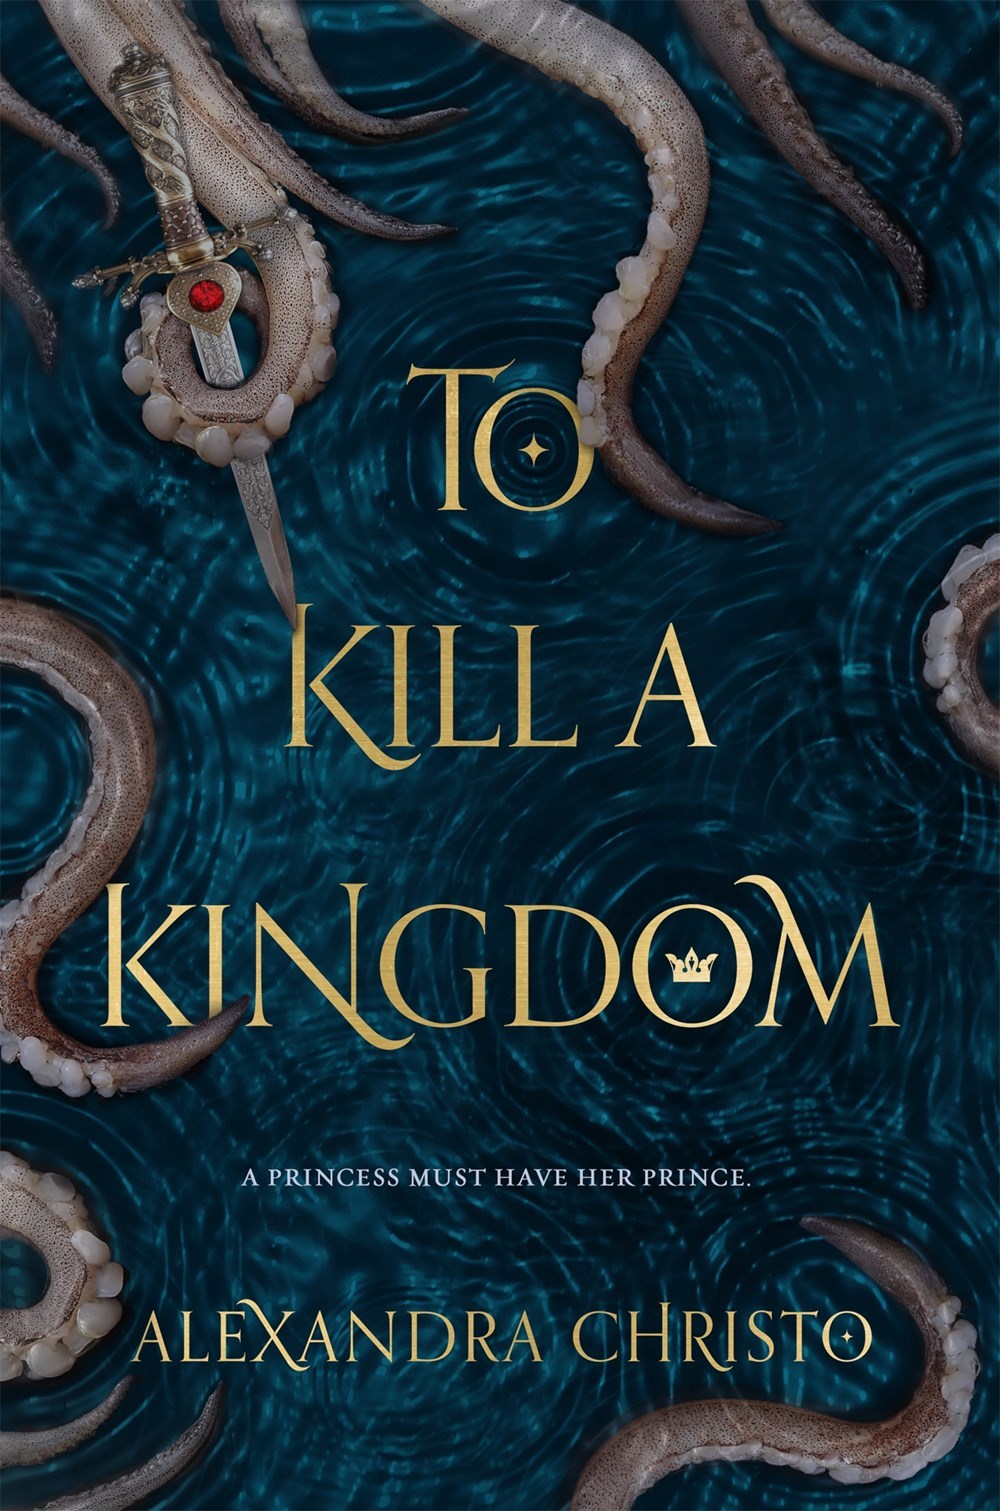 book to kill a kingdom